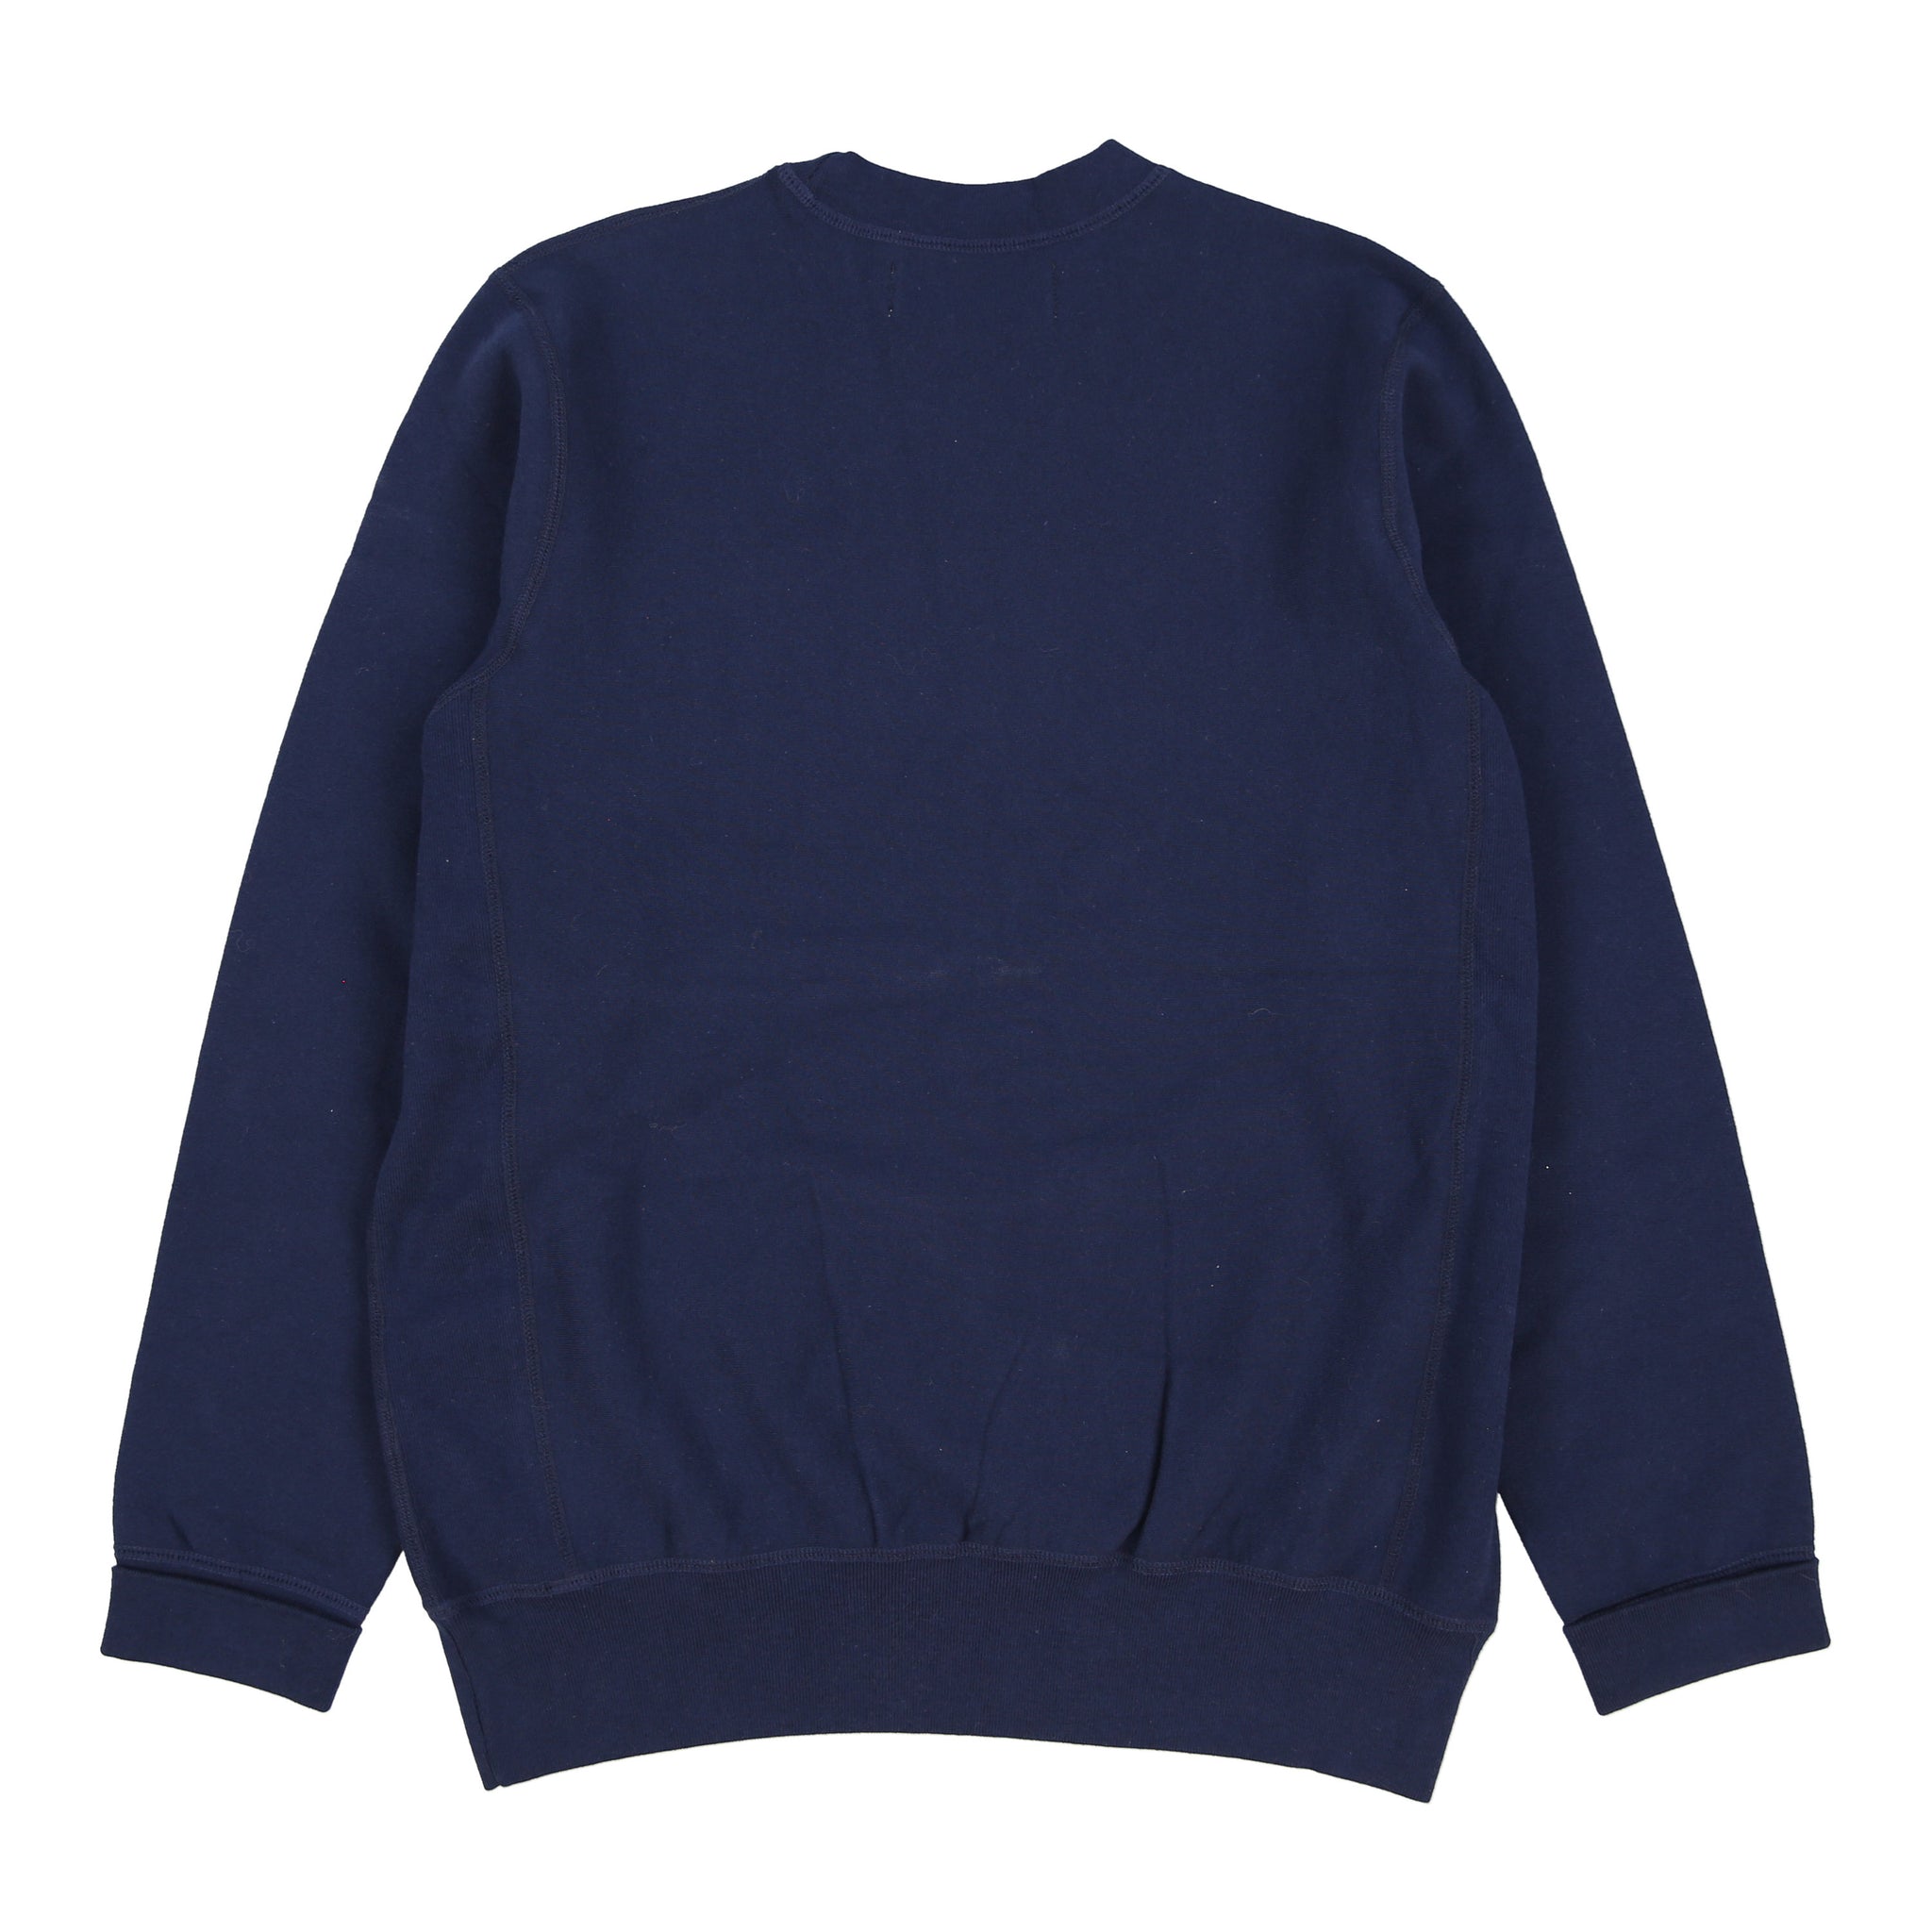 New 2015 Bianca Chandon Lover Crew Sweatshirt Size S